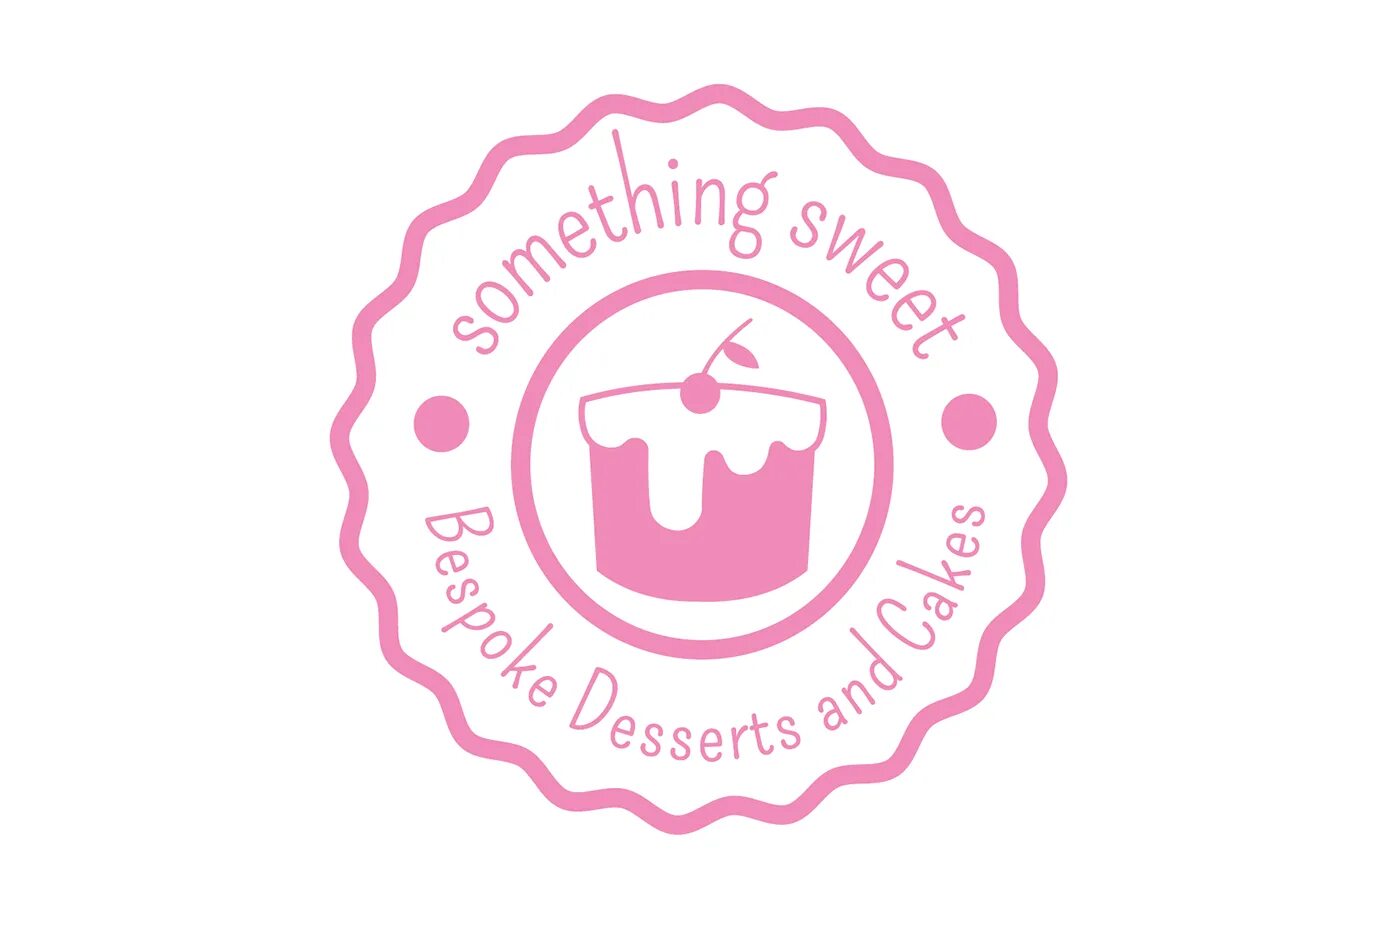 Sweet sweetiebonanza com. Sweet логотип. Логотип магазина сладостей. Свит лайф лого. Сладкая жизнь логотип.